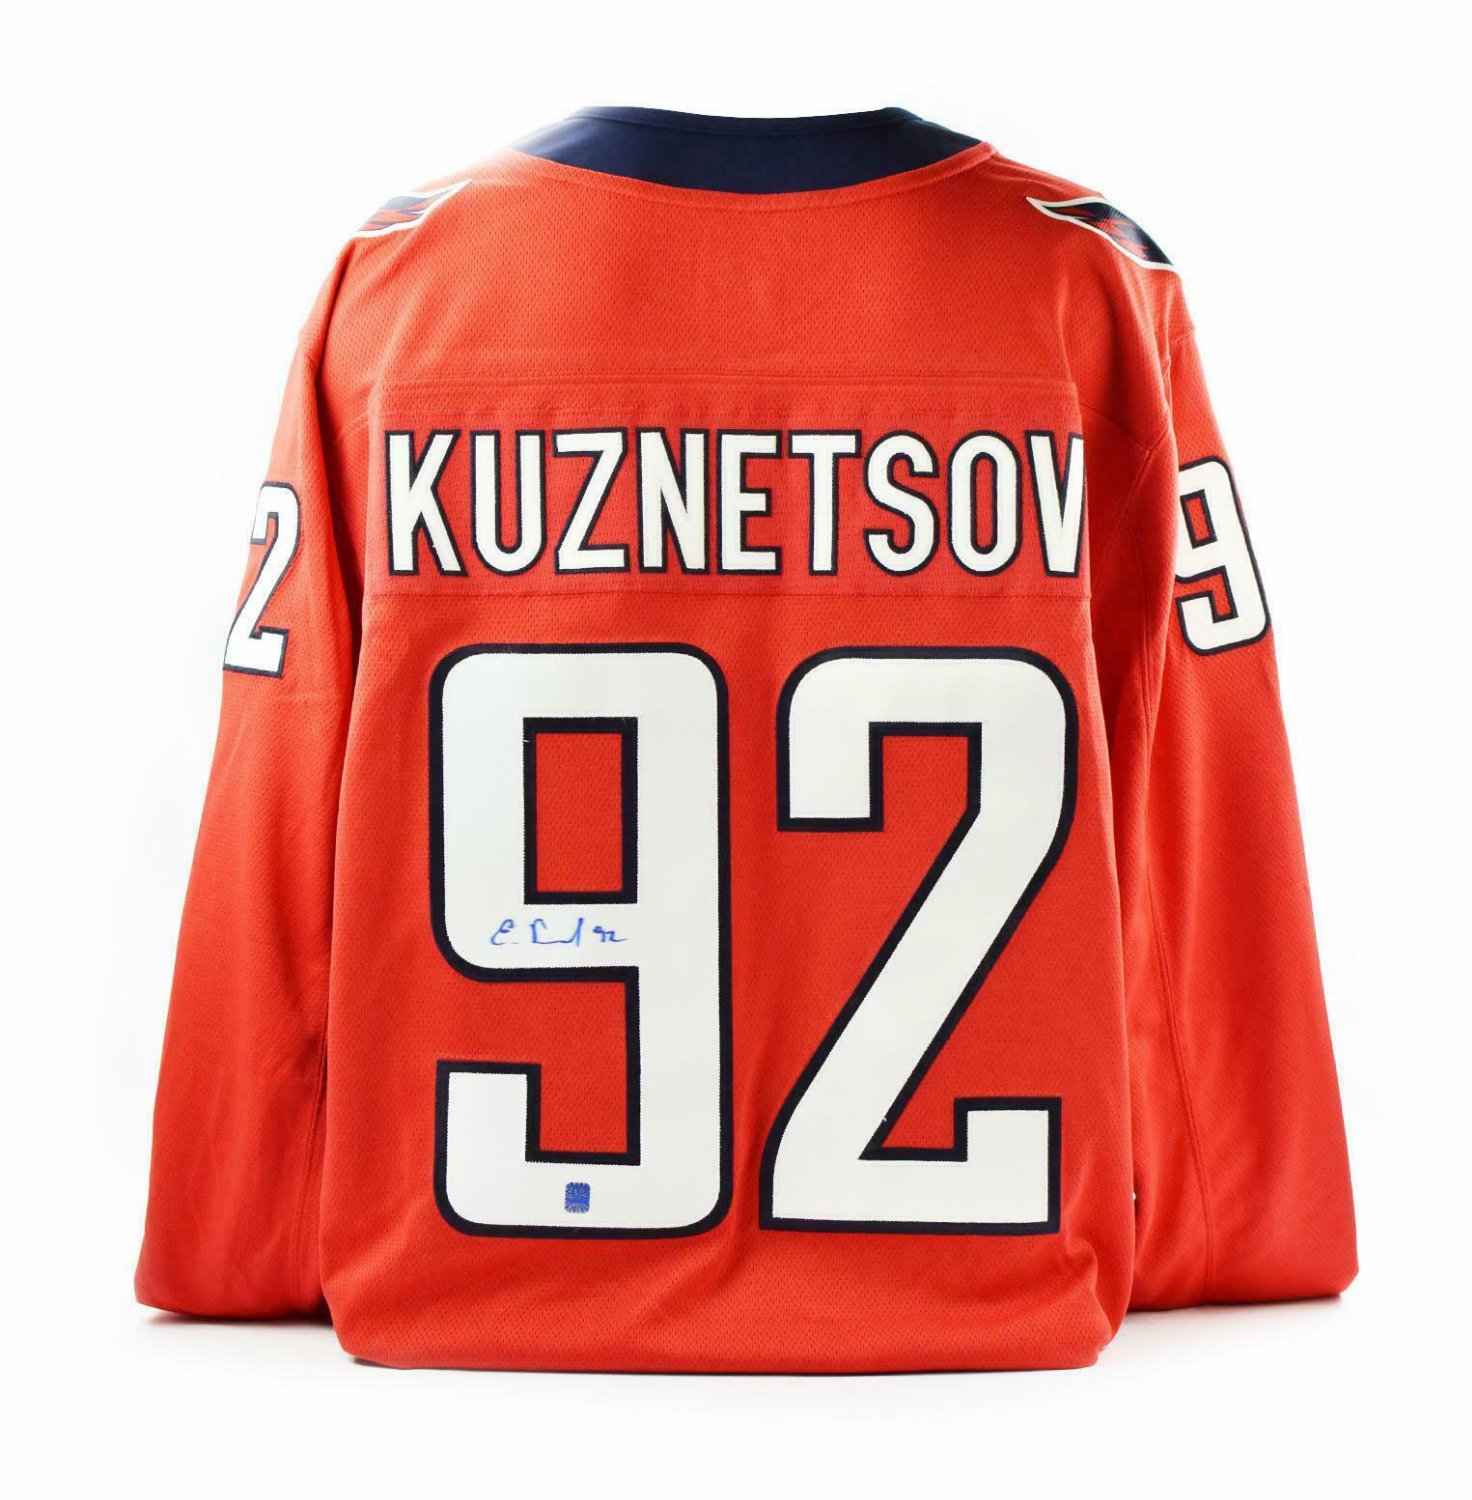 kuznetsov jersey for sale